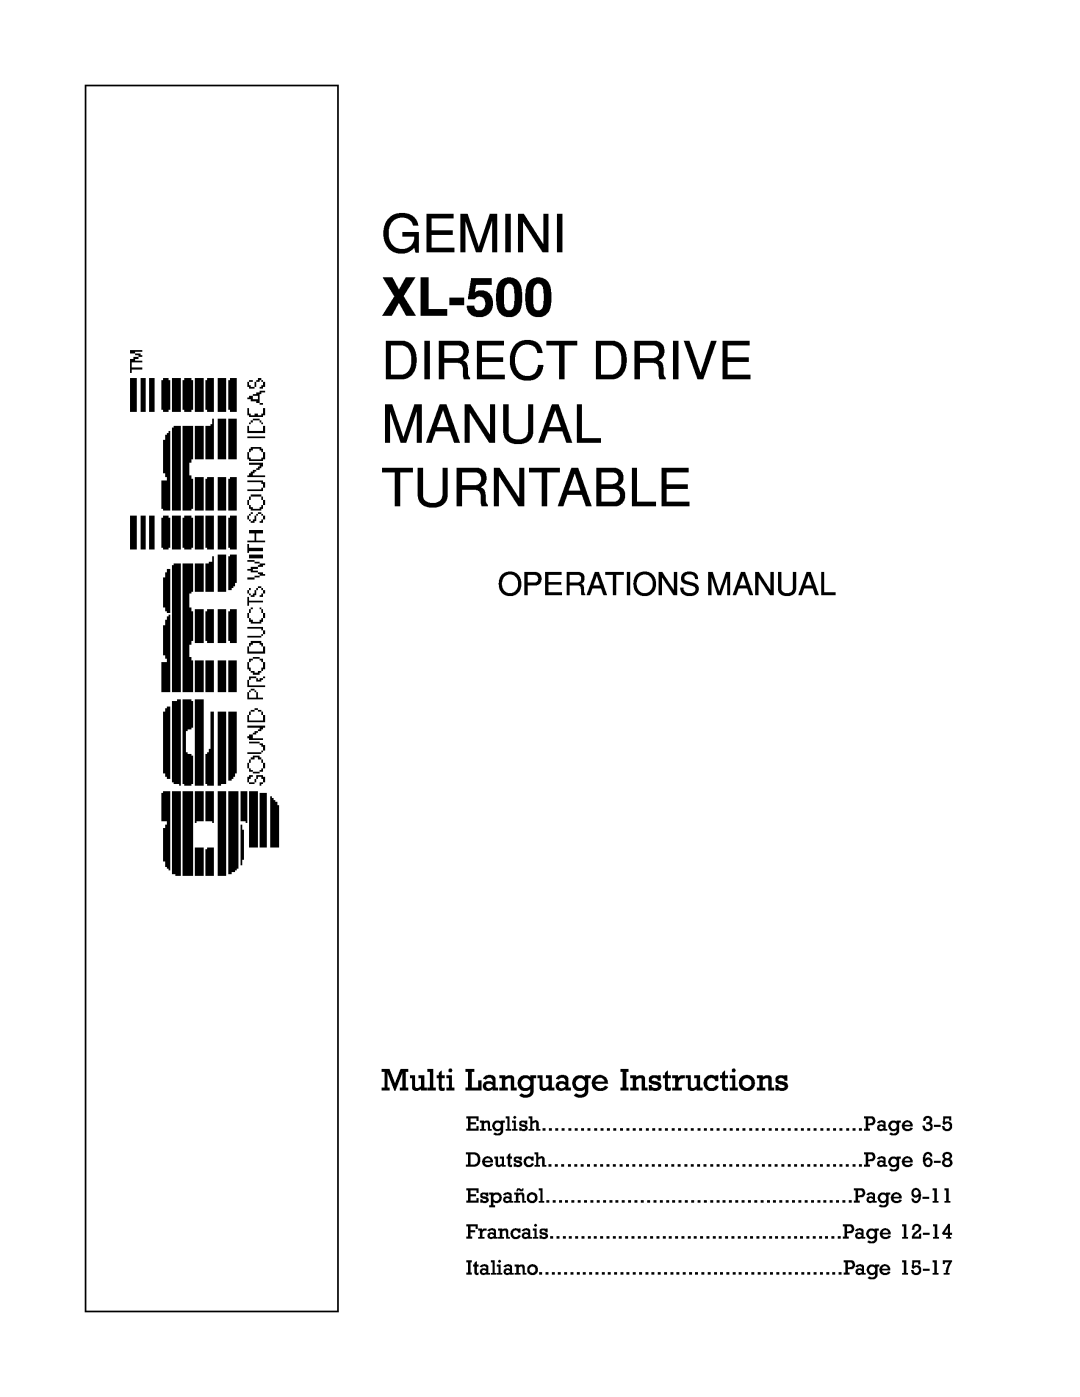 Gemini XL-500 manual Gemini, Direct Drive Manual Turntable, OPERATIONS MANUAL Multi Language Instructions 